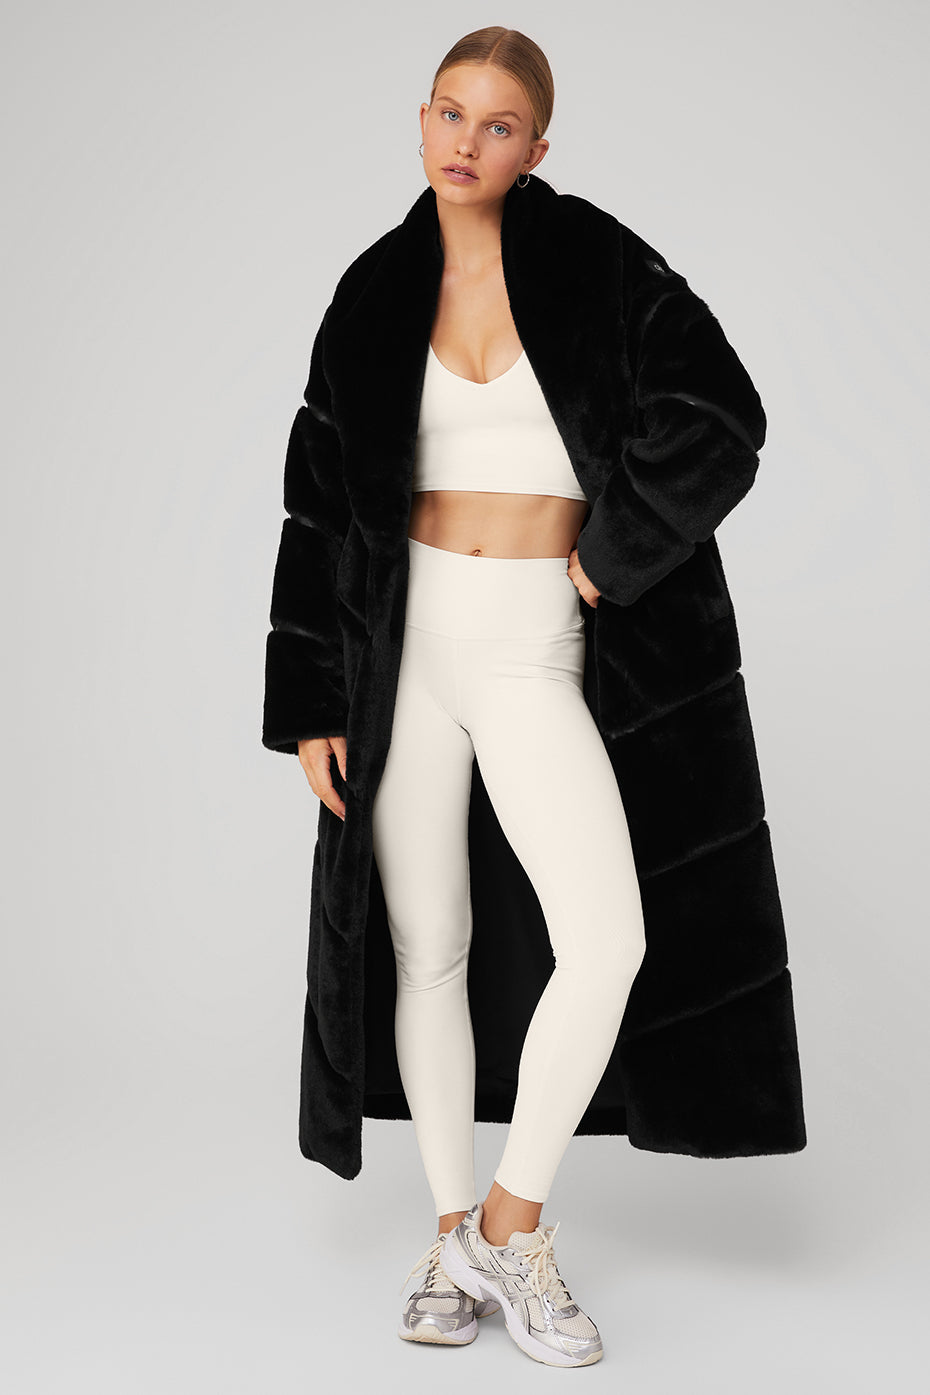 ALO Yoga, Jackets & Coats, The Knockout Faux Fur Jacket